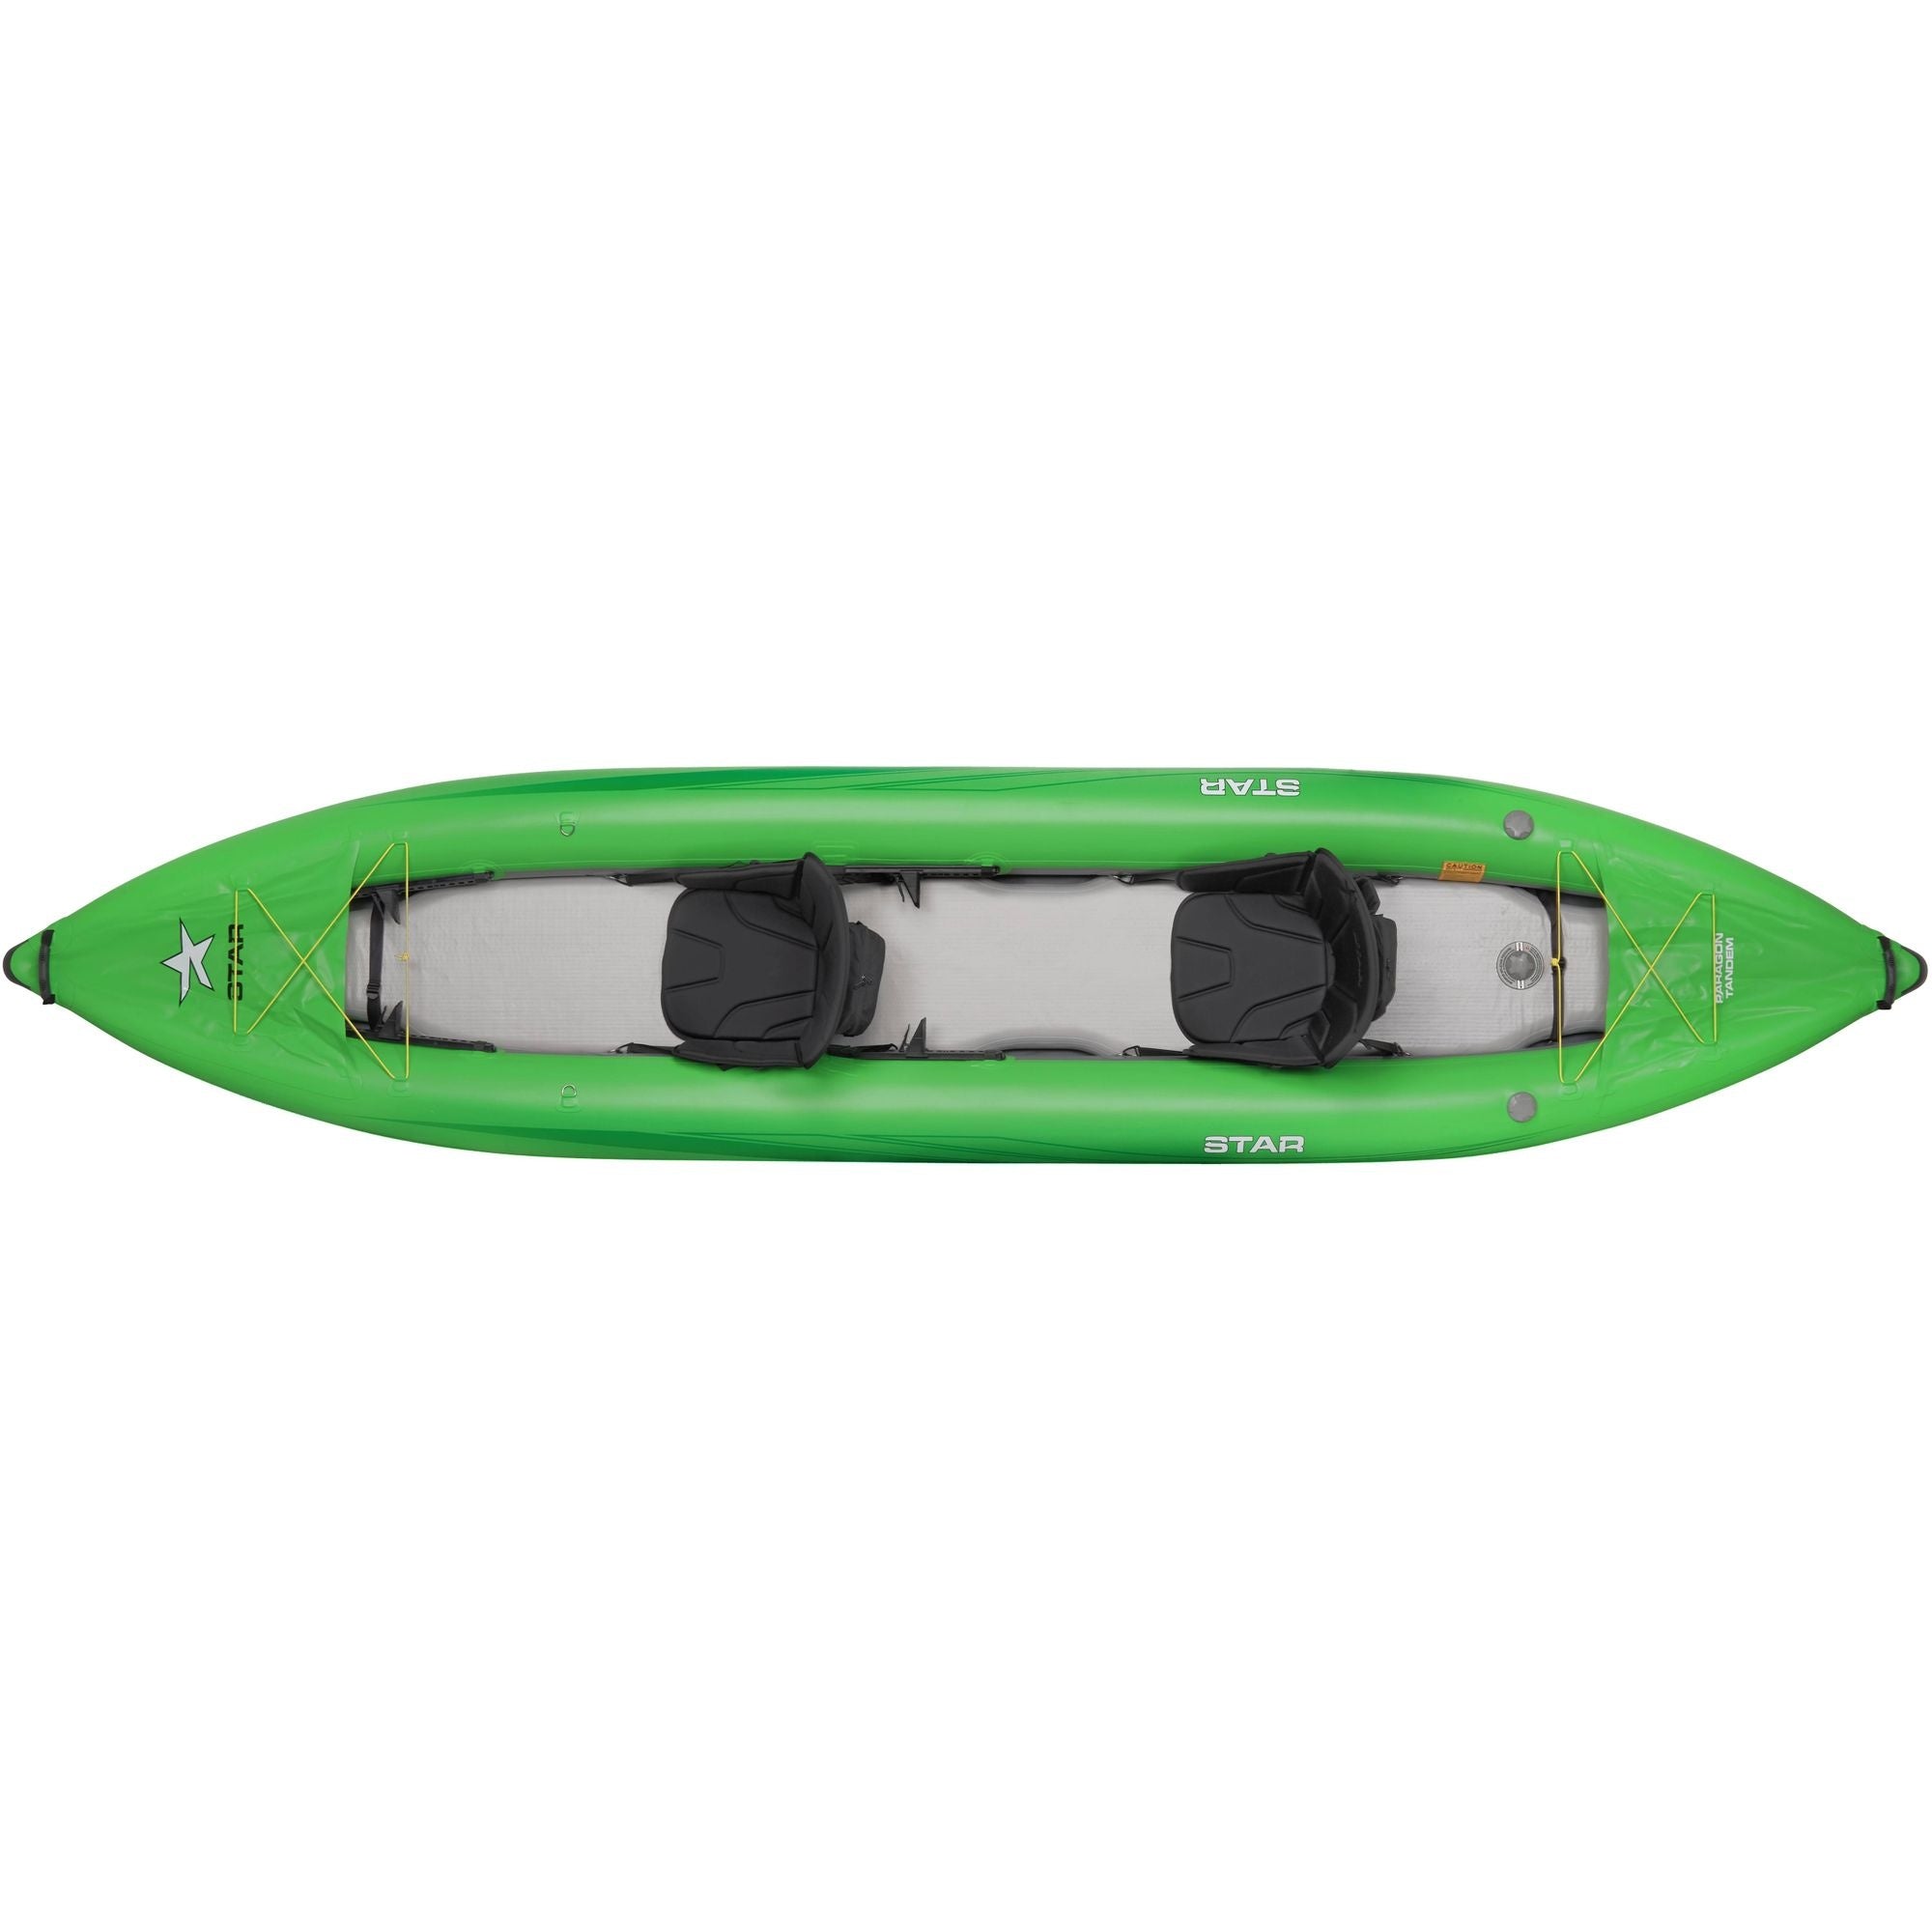 STAR - Paragon Tandem Inflatable Kayak